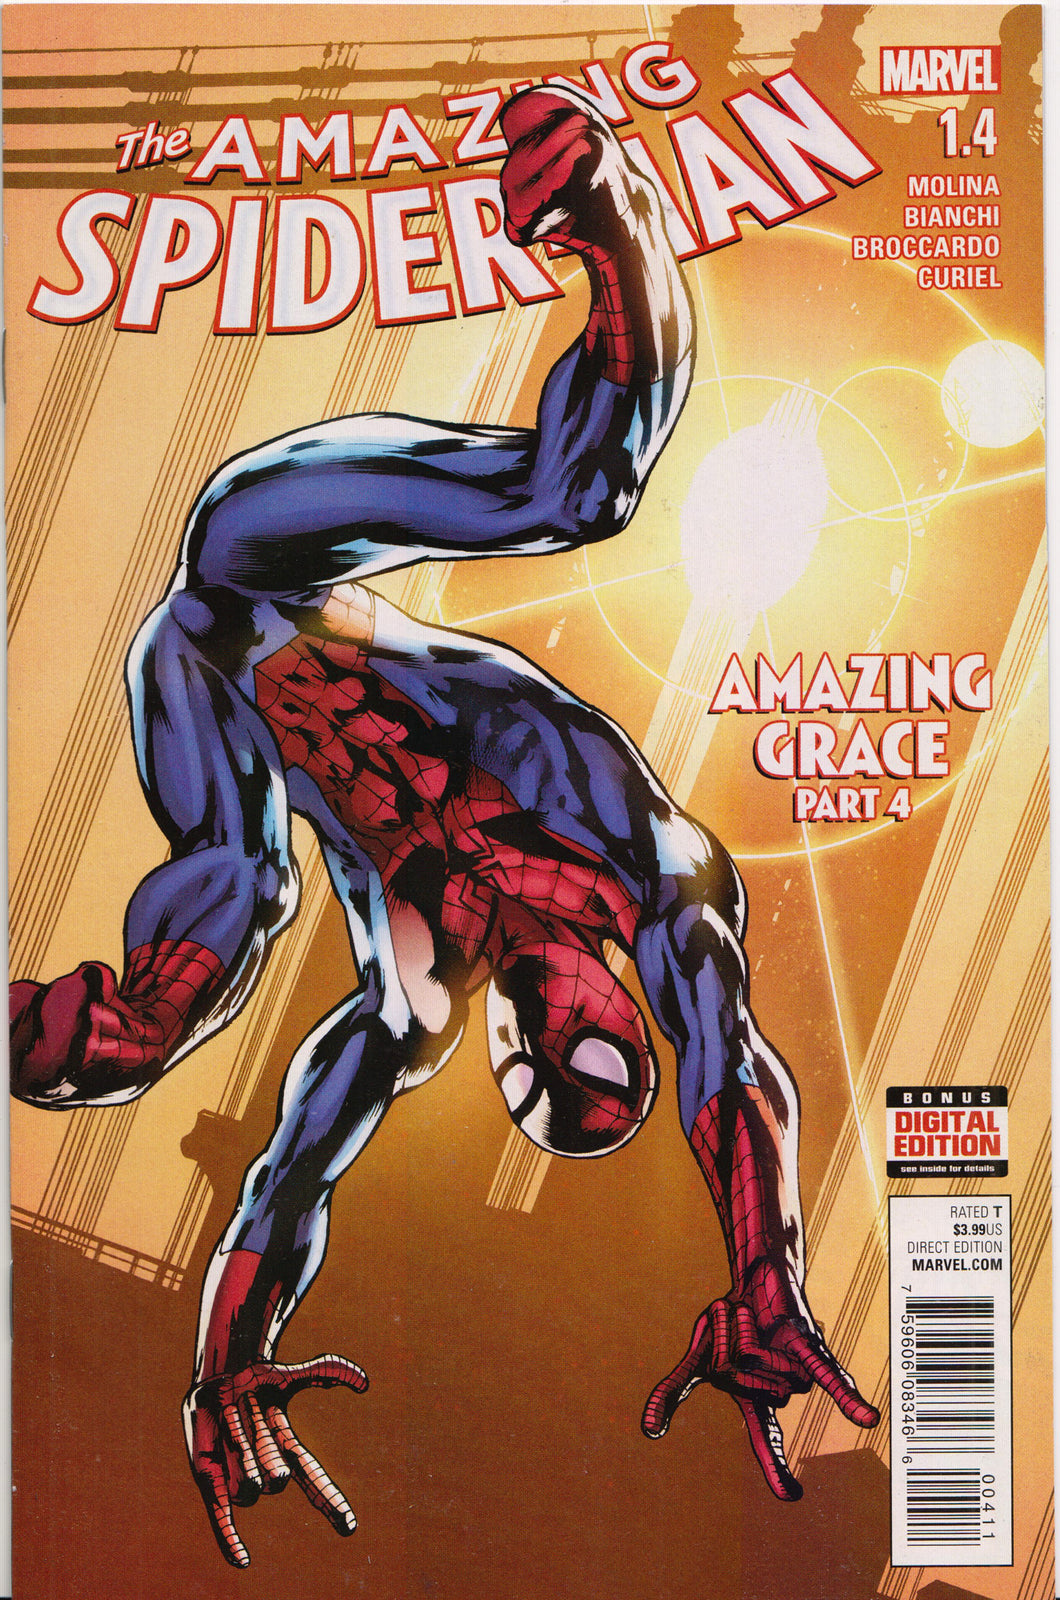 THE AMAZING SPIDER-MAN #1.4 (Bryan Hitch Variant)(2015) ~ Marvel Comics